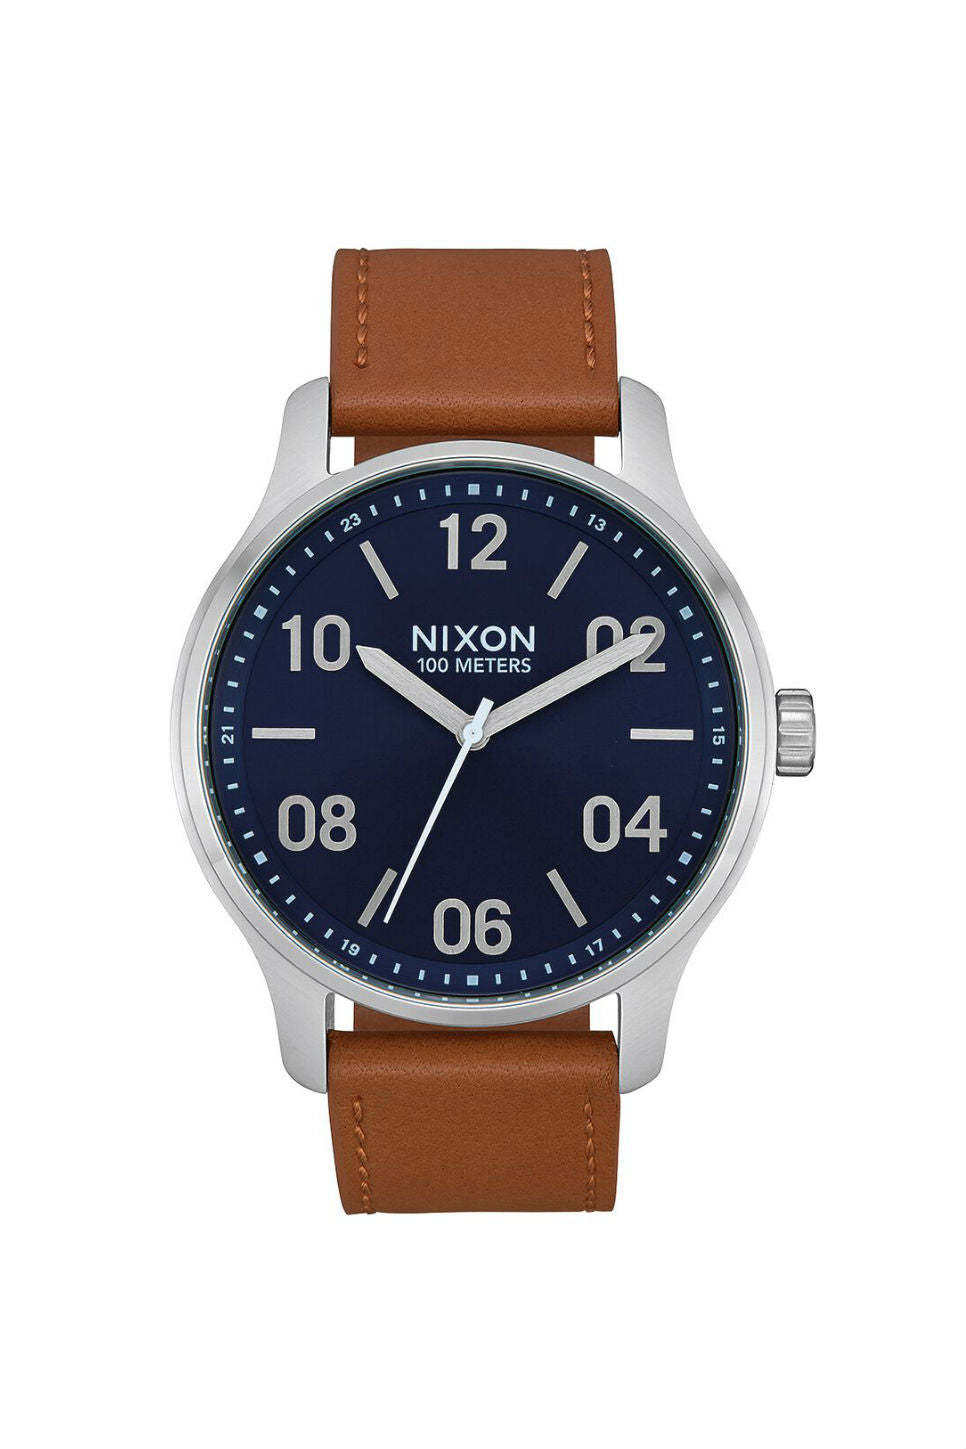 Nixon - Patrol Leather Watch - Navy/Saddle - Front